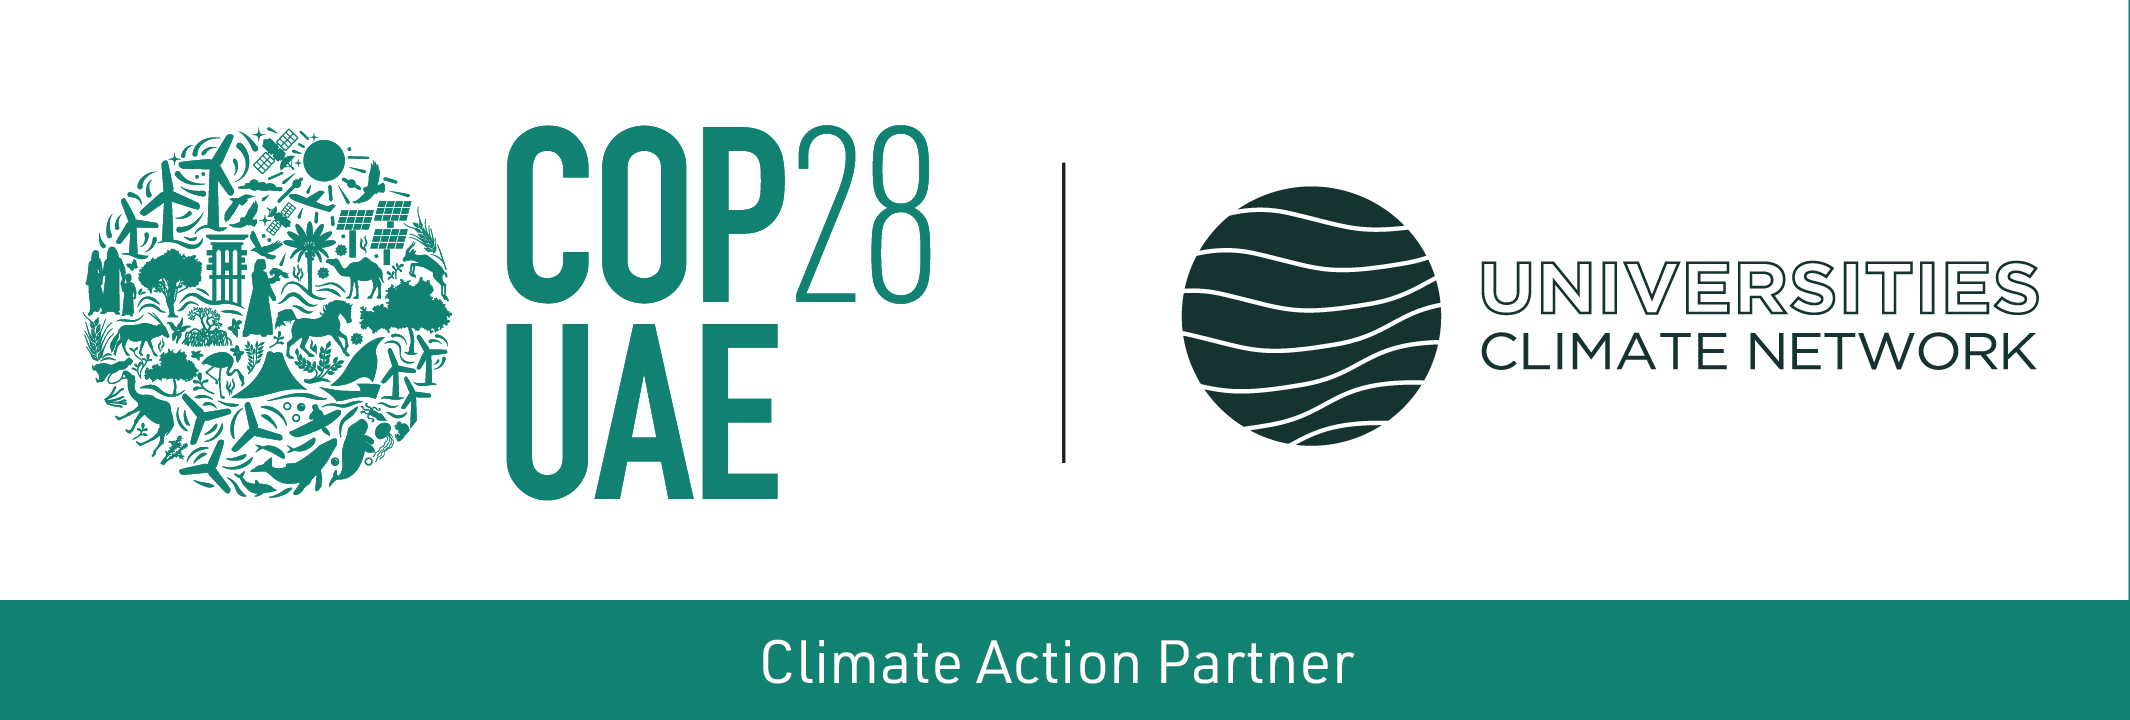 COP28 Universities Climate Network Official Partner